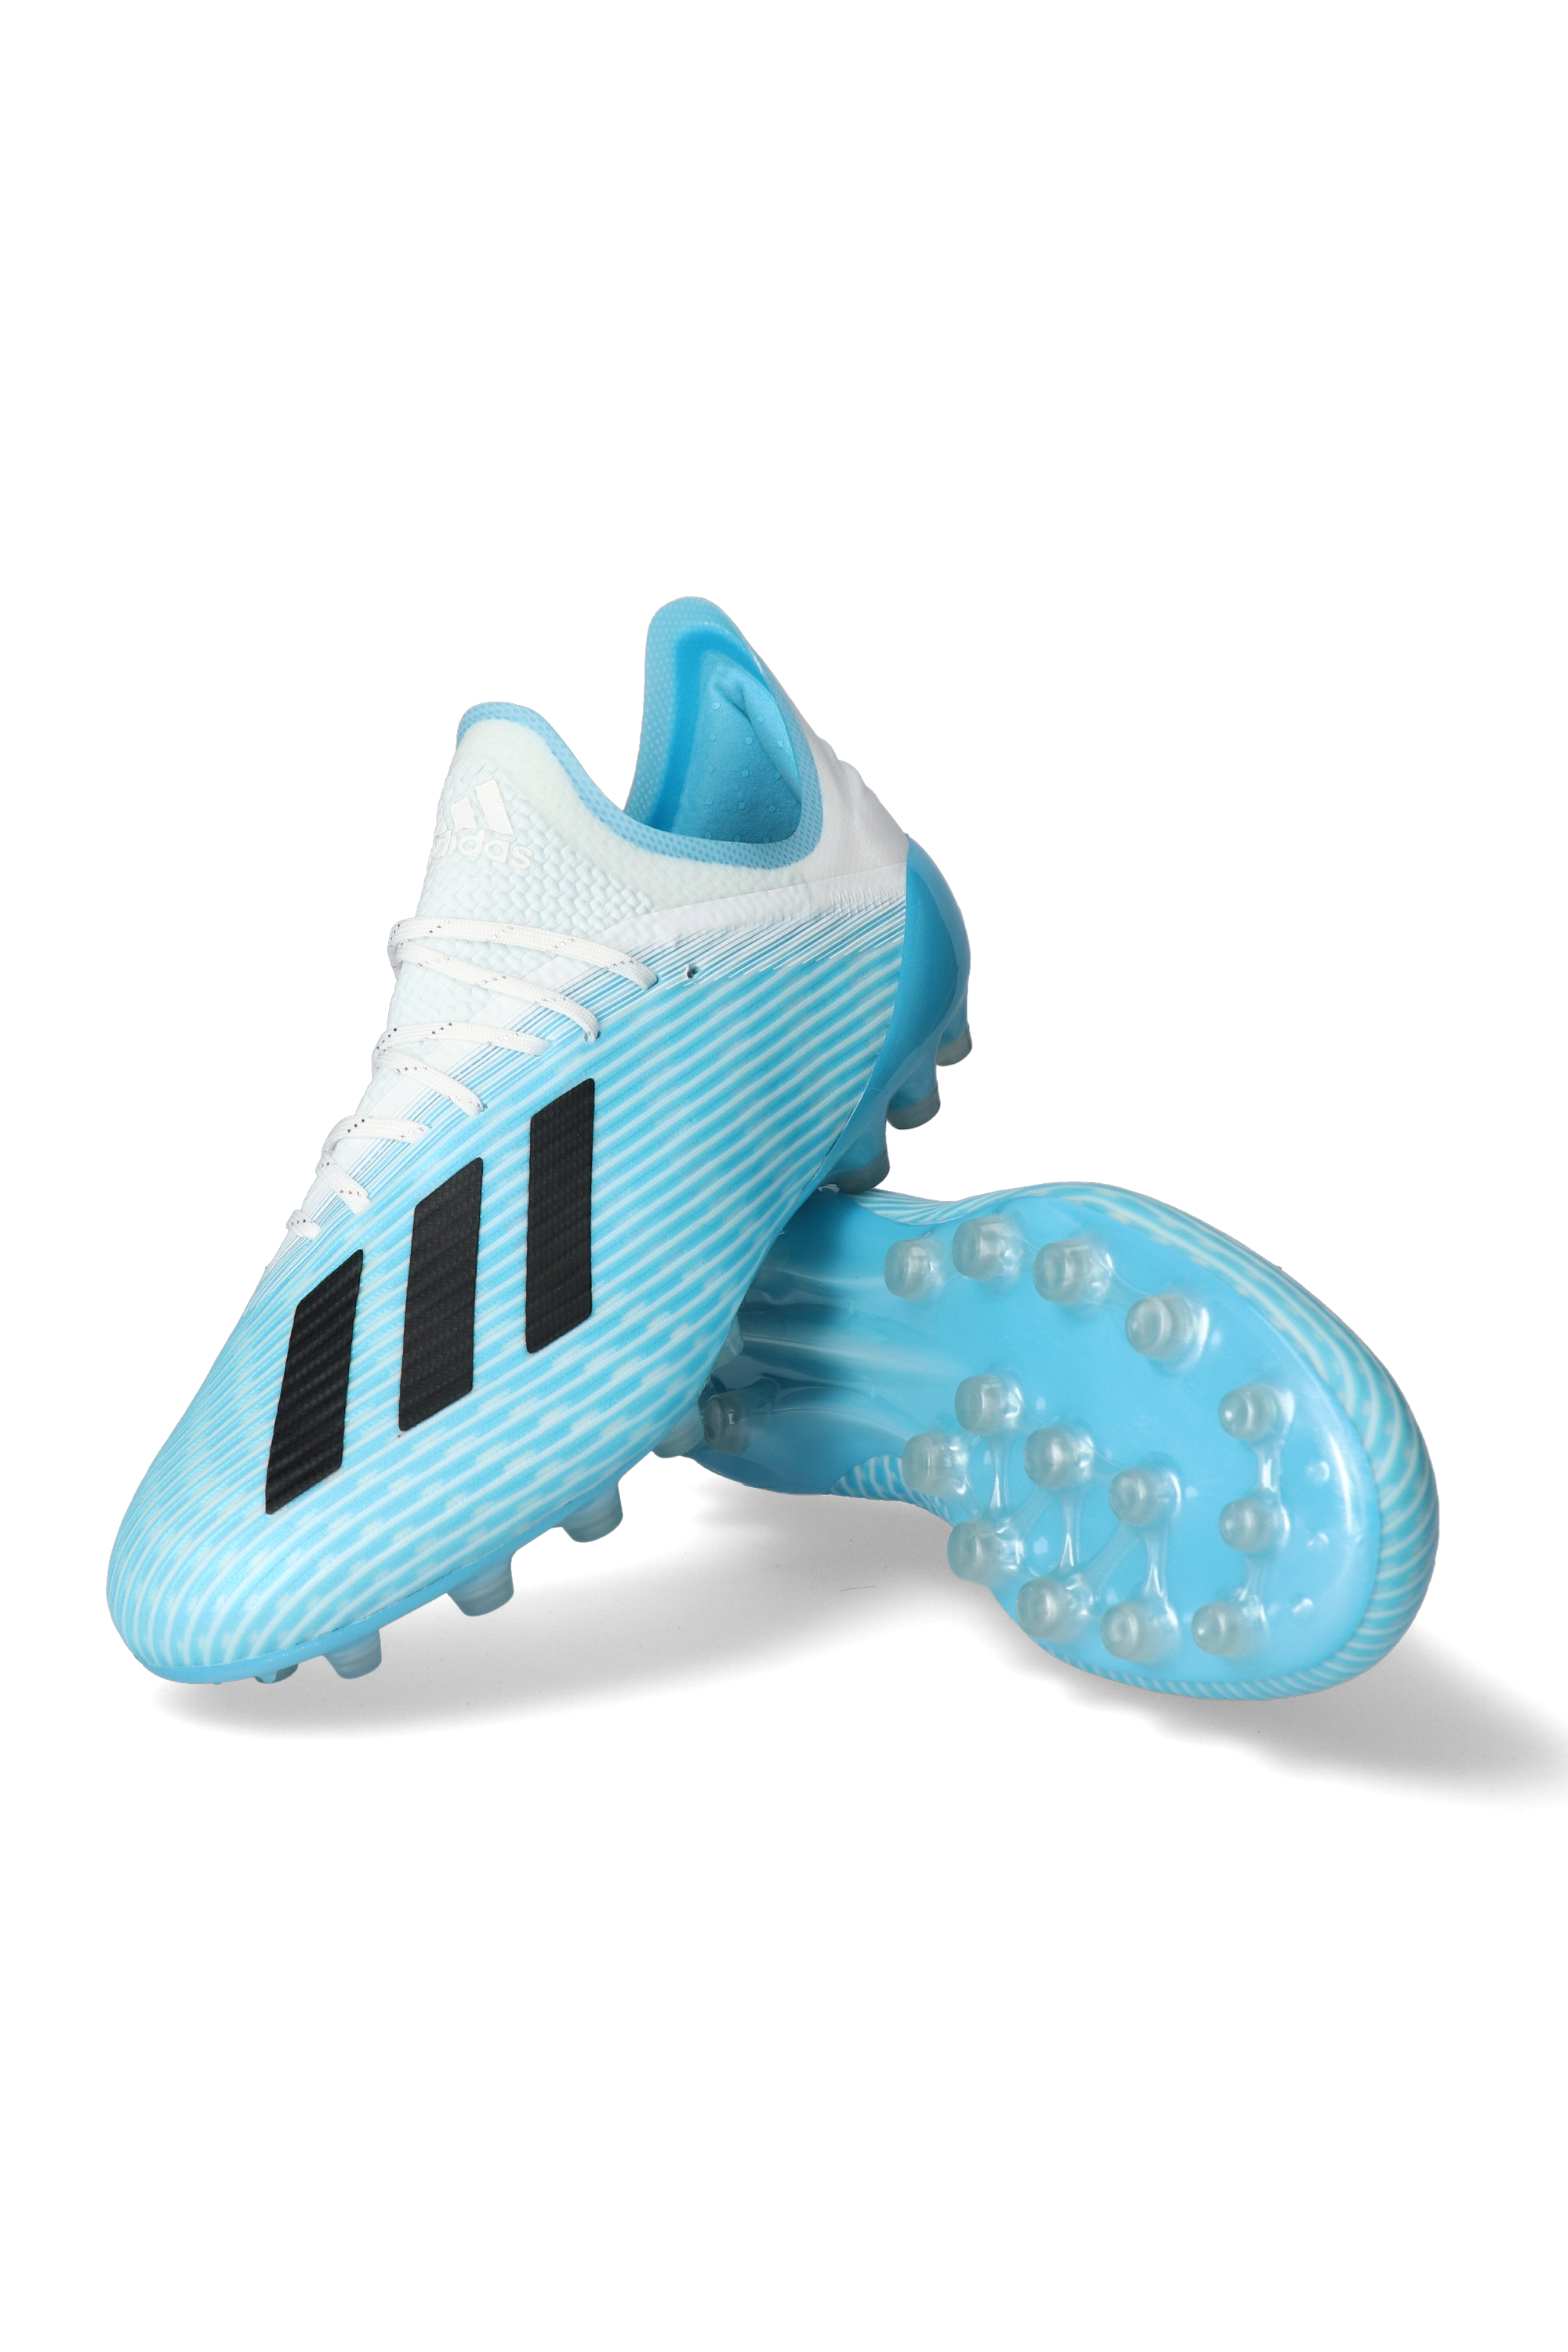 Adidas X 19 1 Ag R Gol Com Football Boots Equipment